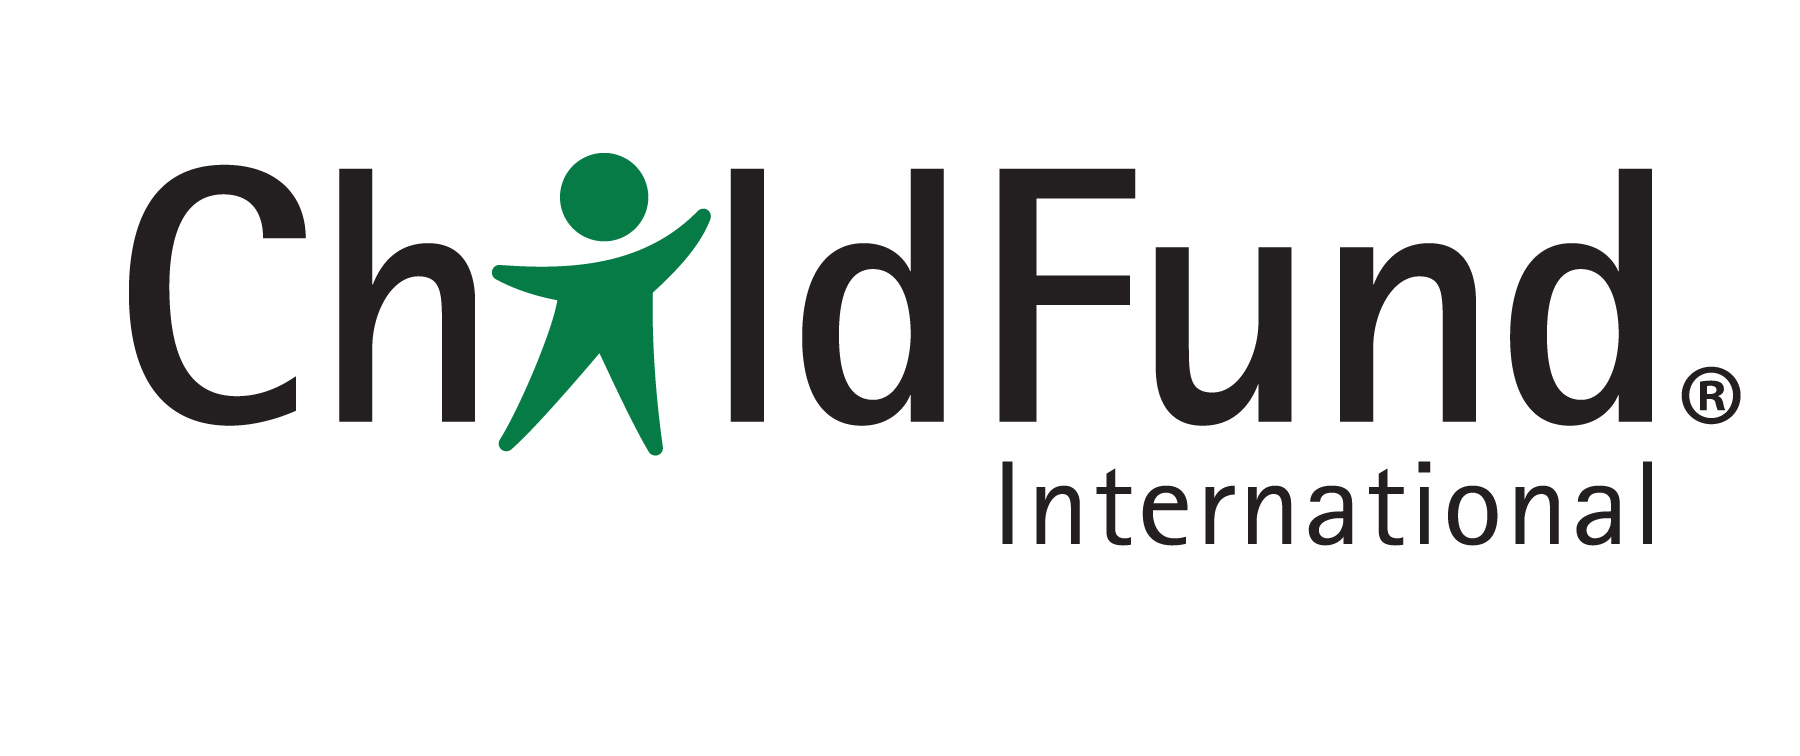 ChildFund-International-JPG-Web-MSOffice.jpg